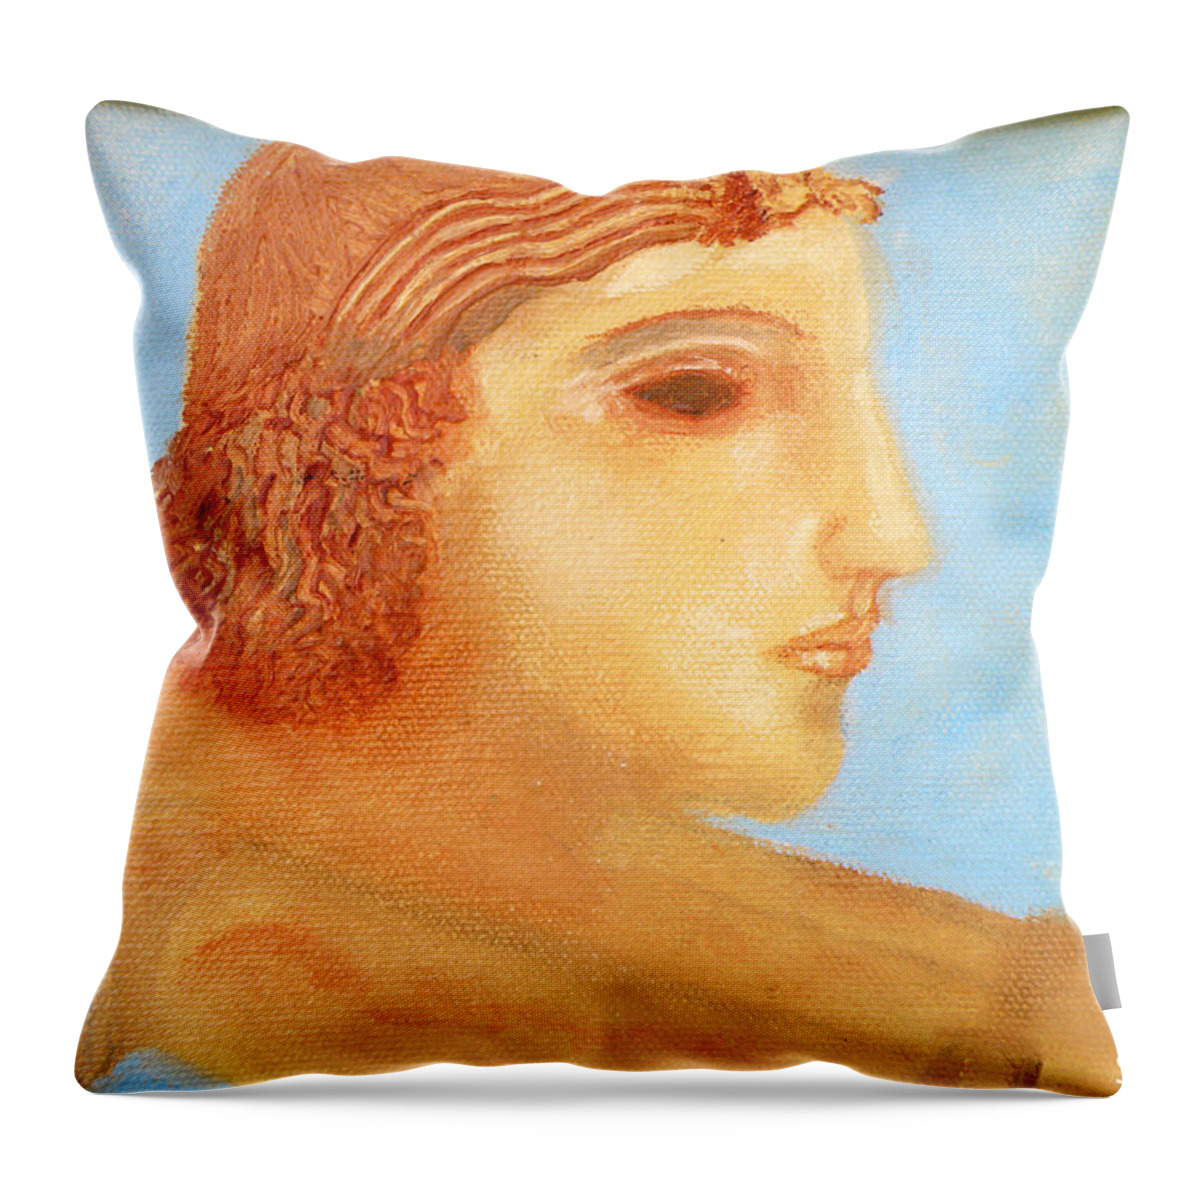 Augusta Stylianou Throw Pillow featuring the painting Apollo Hylates by Augusta Stylianou